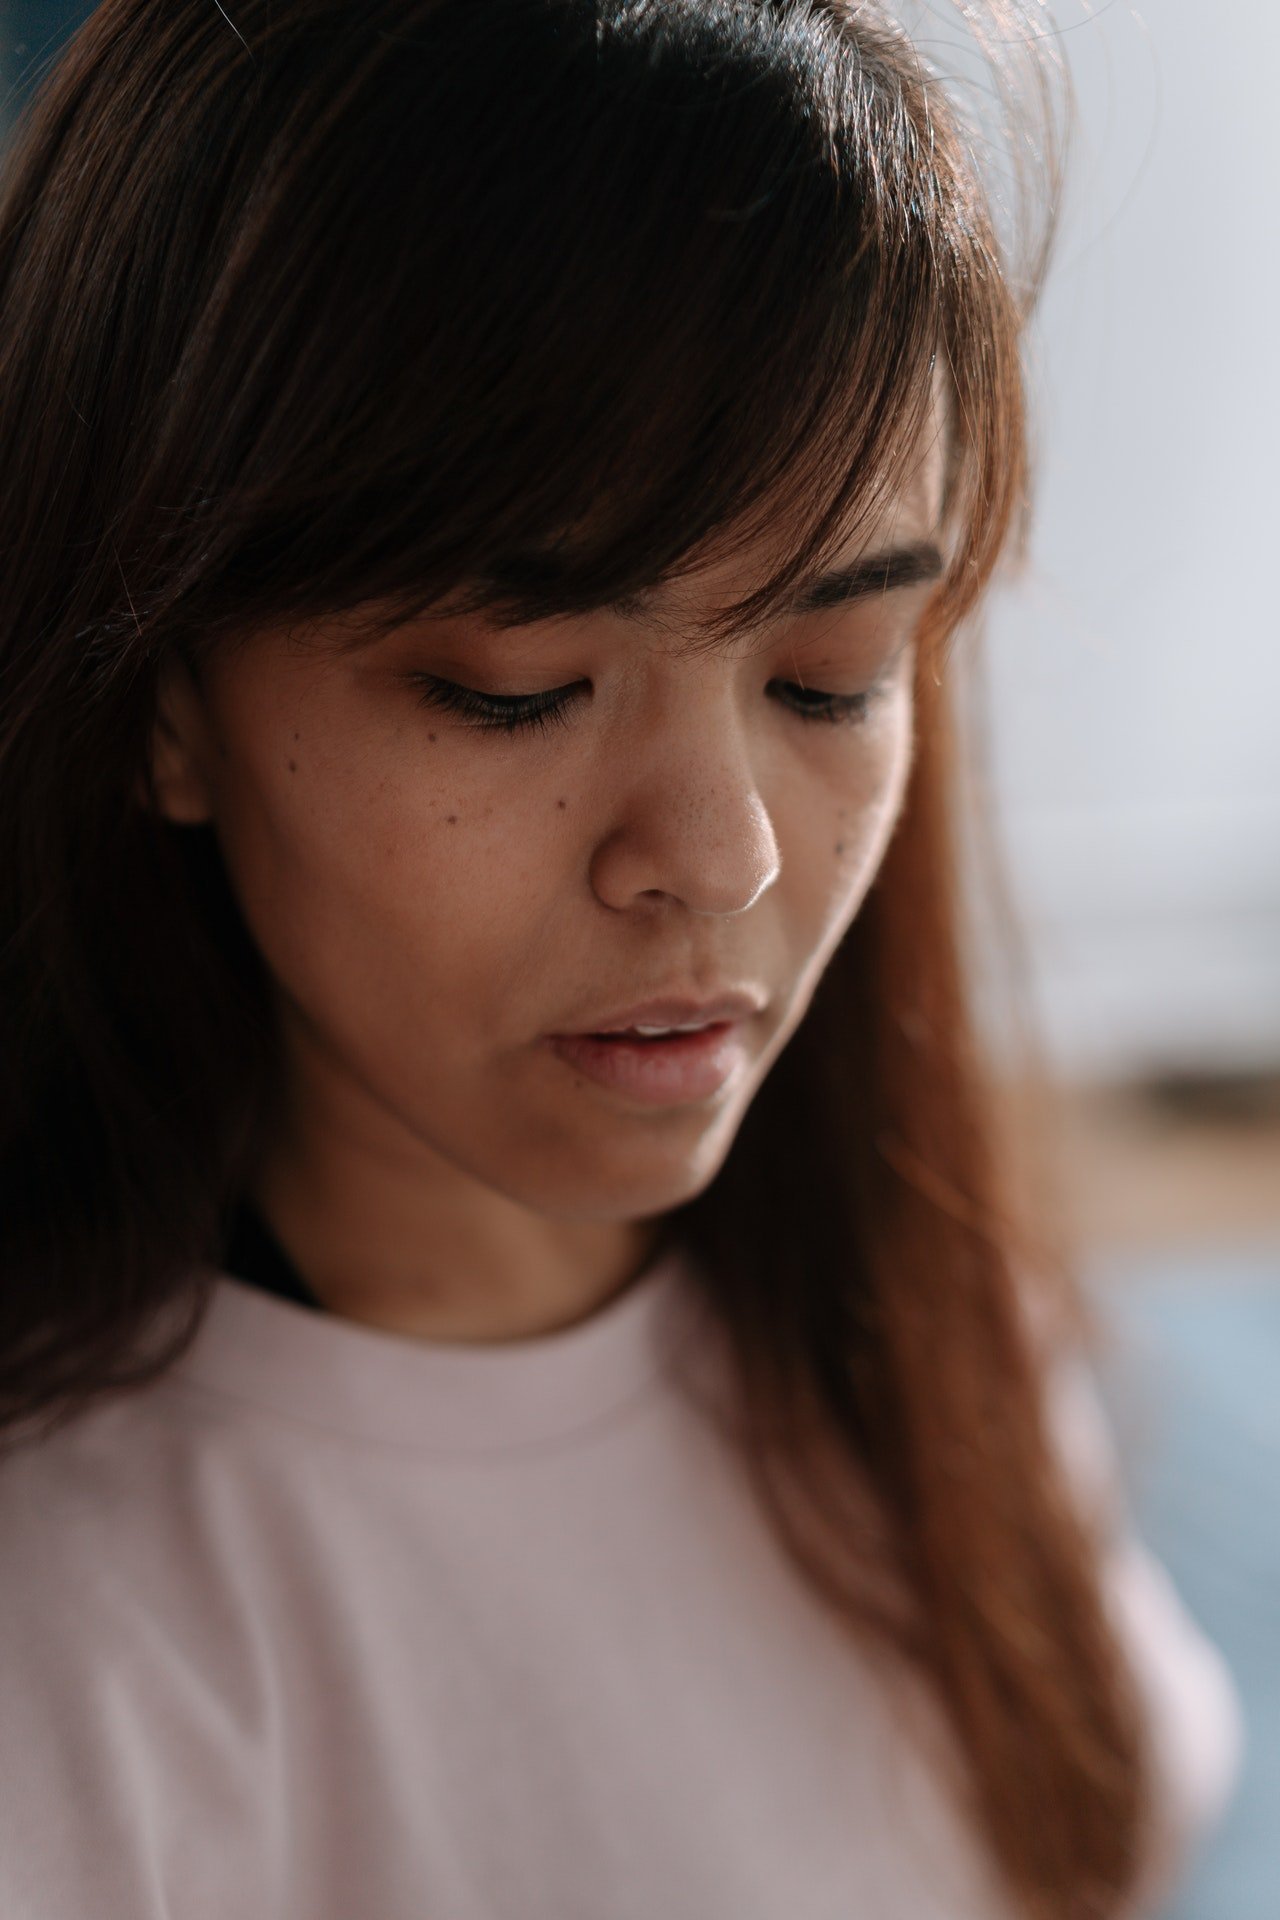 Una mujer joven que parece estar abrumada. | Foto: Pexels